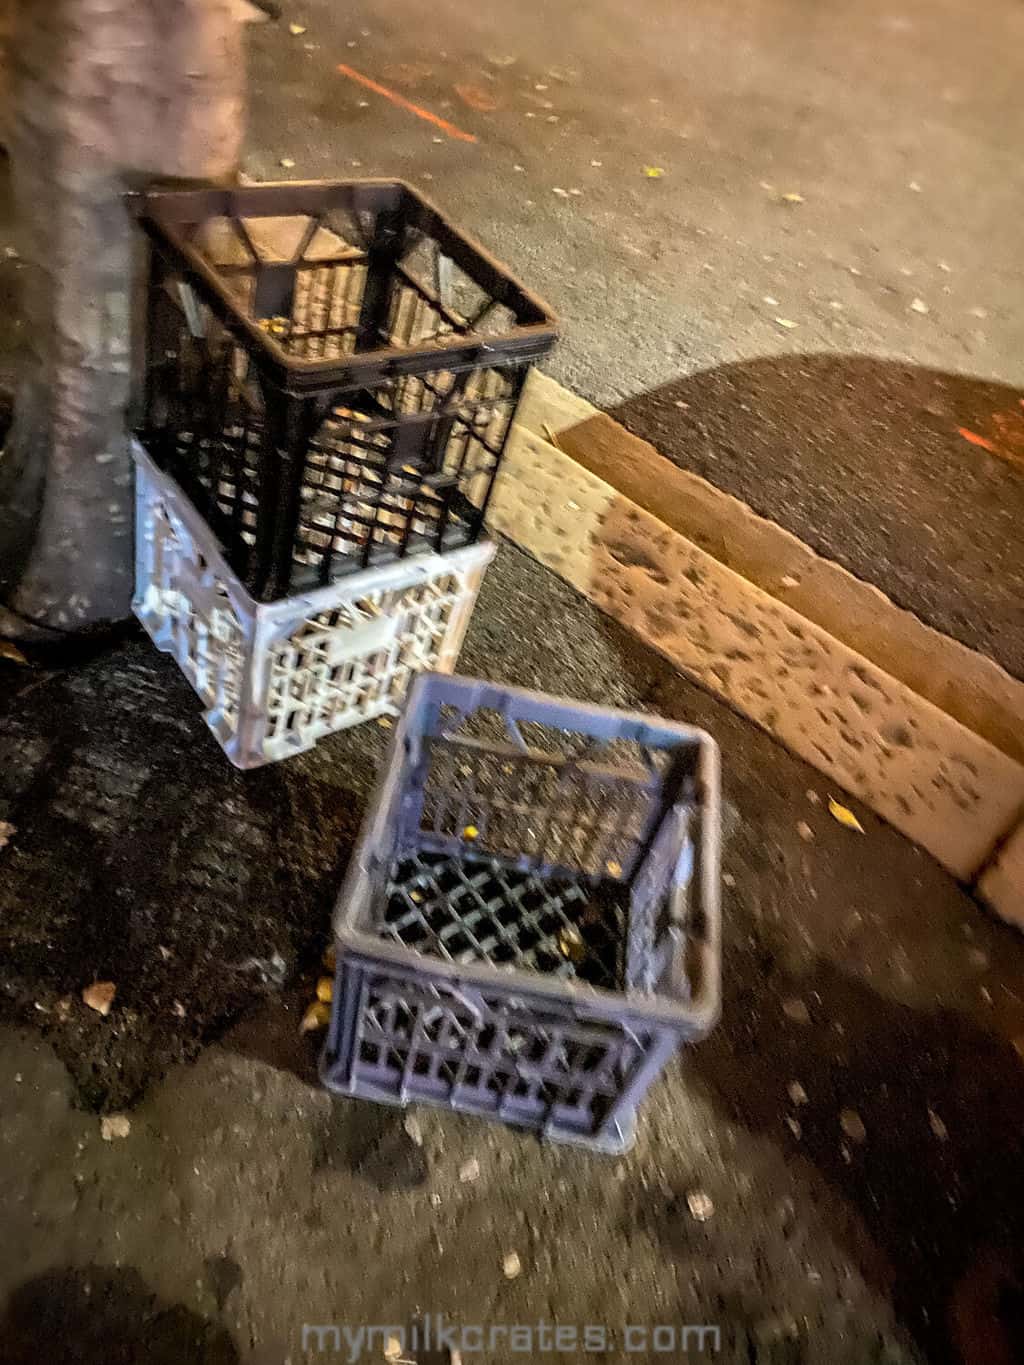 Blurry night crates